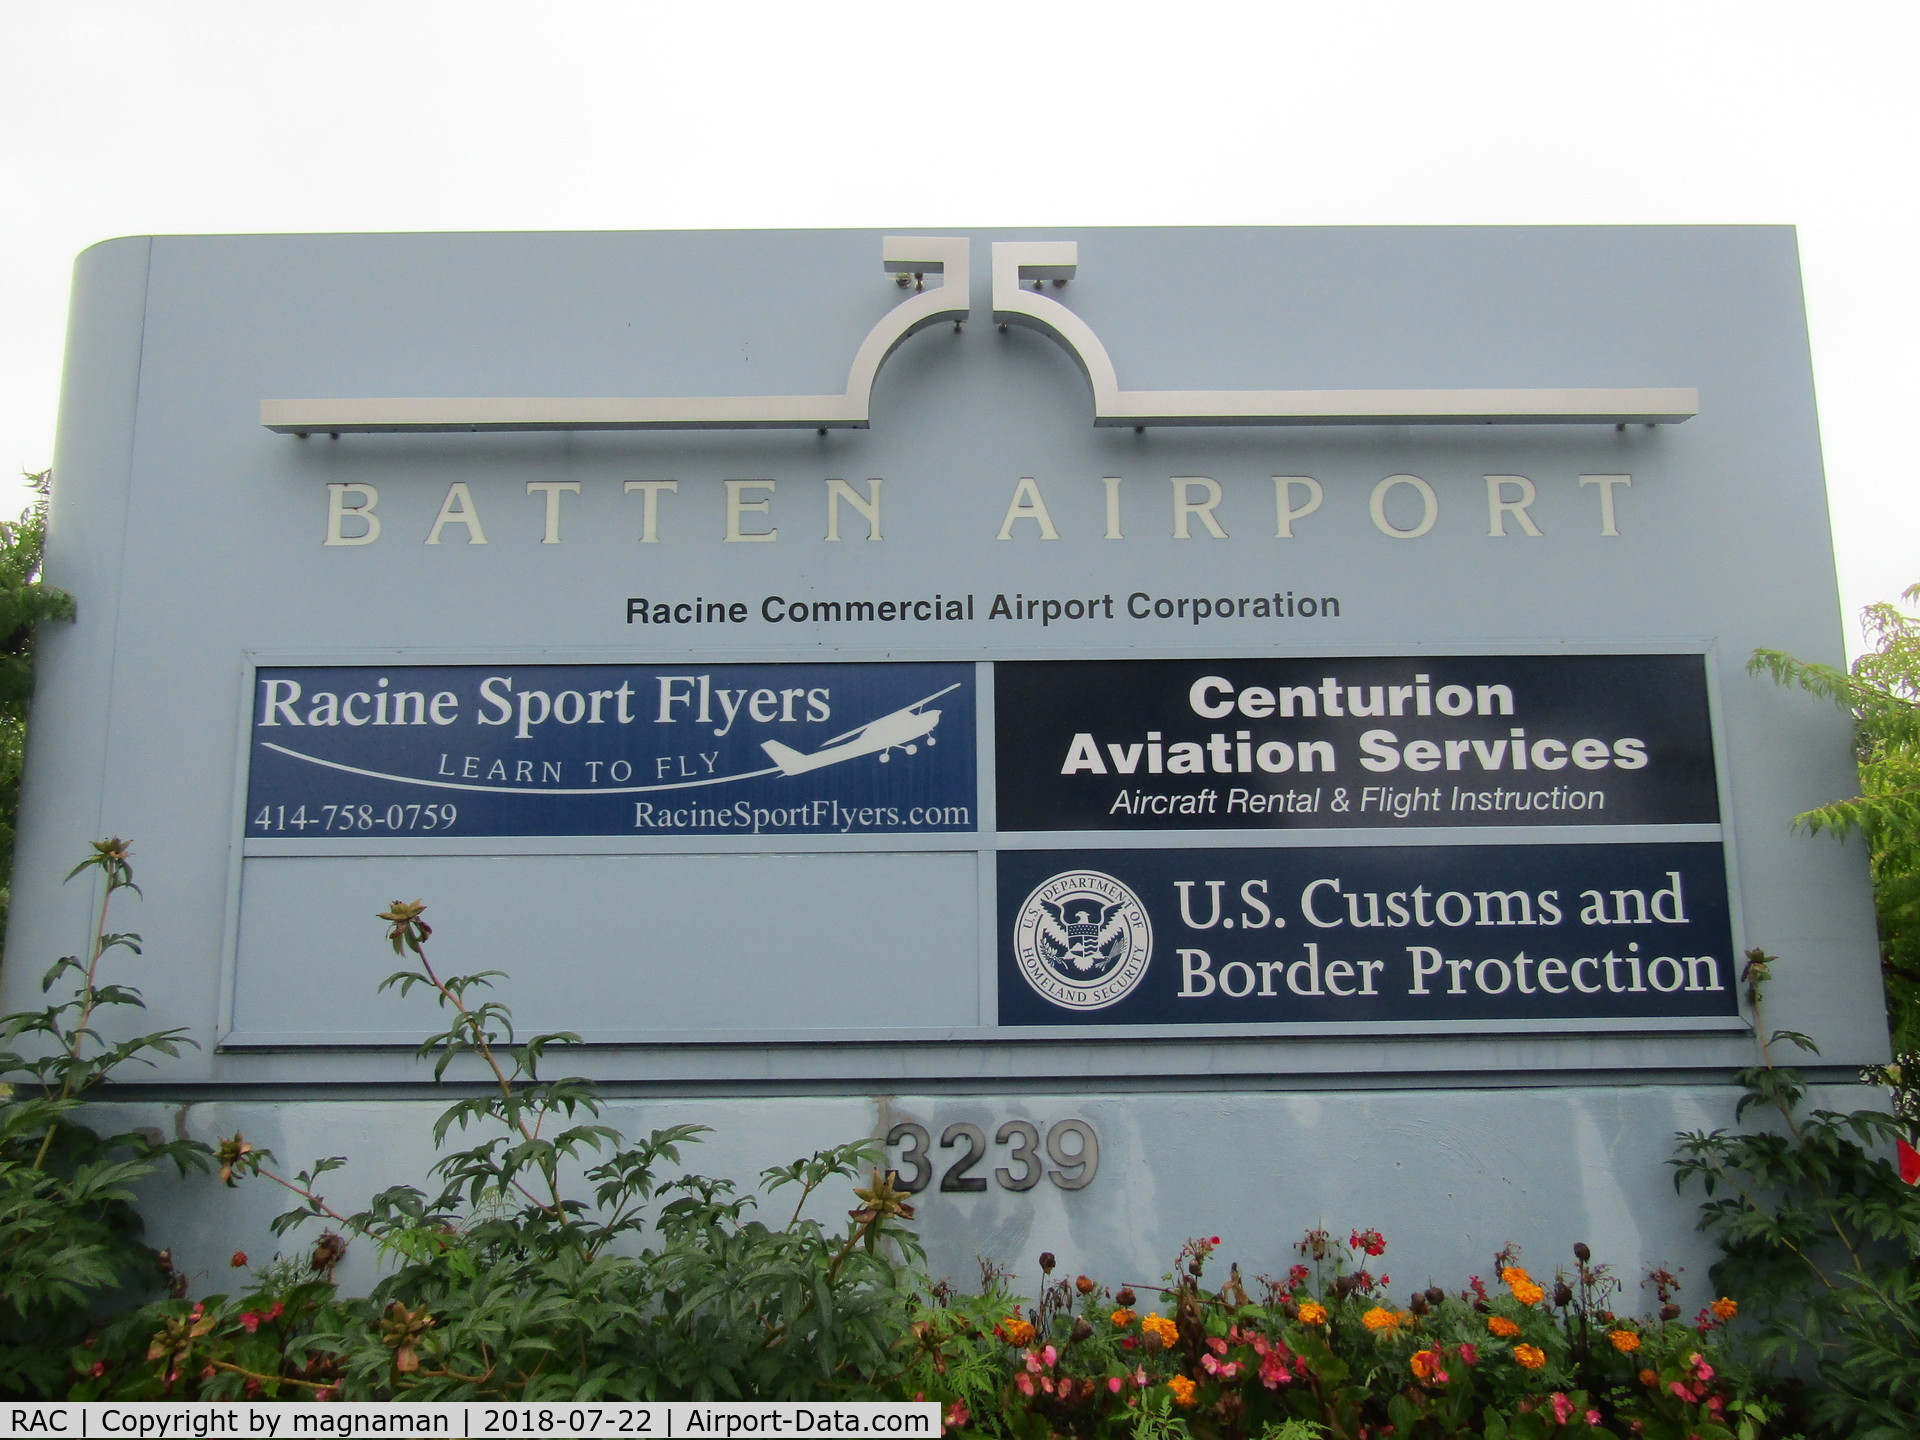 John H Batten Airport (RAC) - sign at entry to car aprk